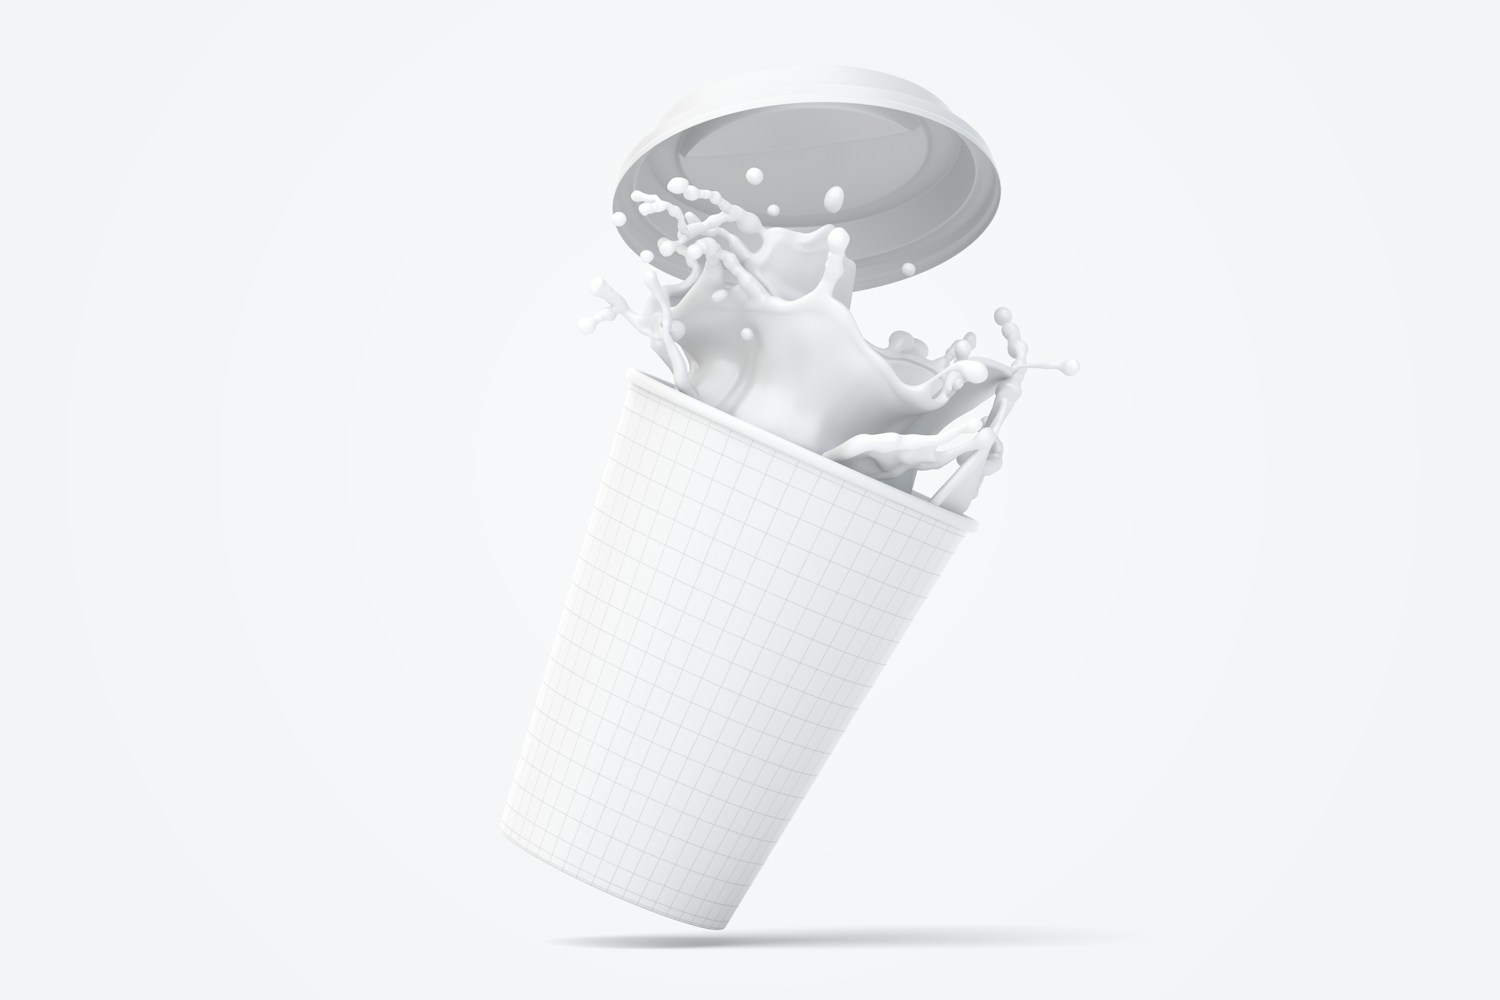 12oz Paper Coffee Cup Mockup with Splash